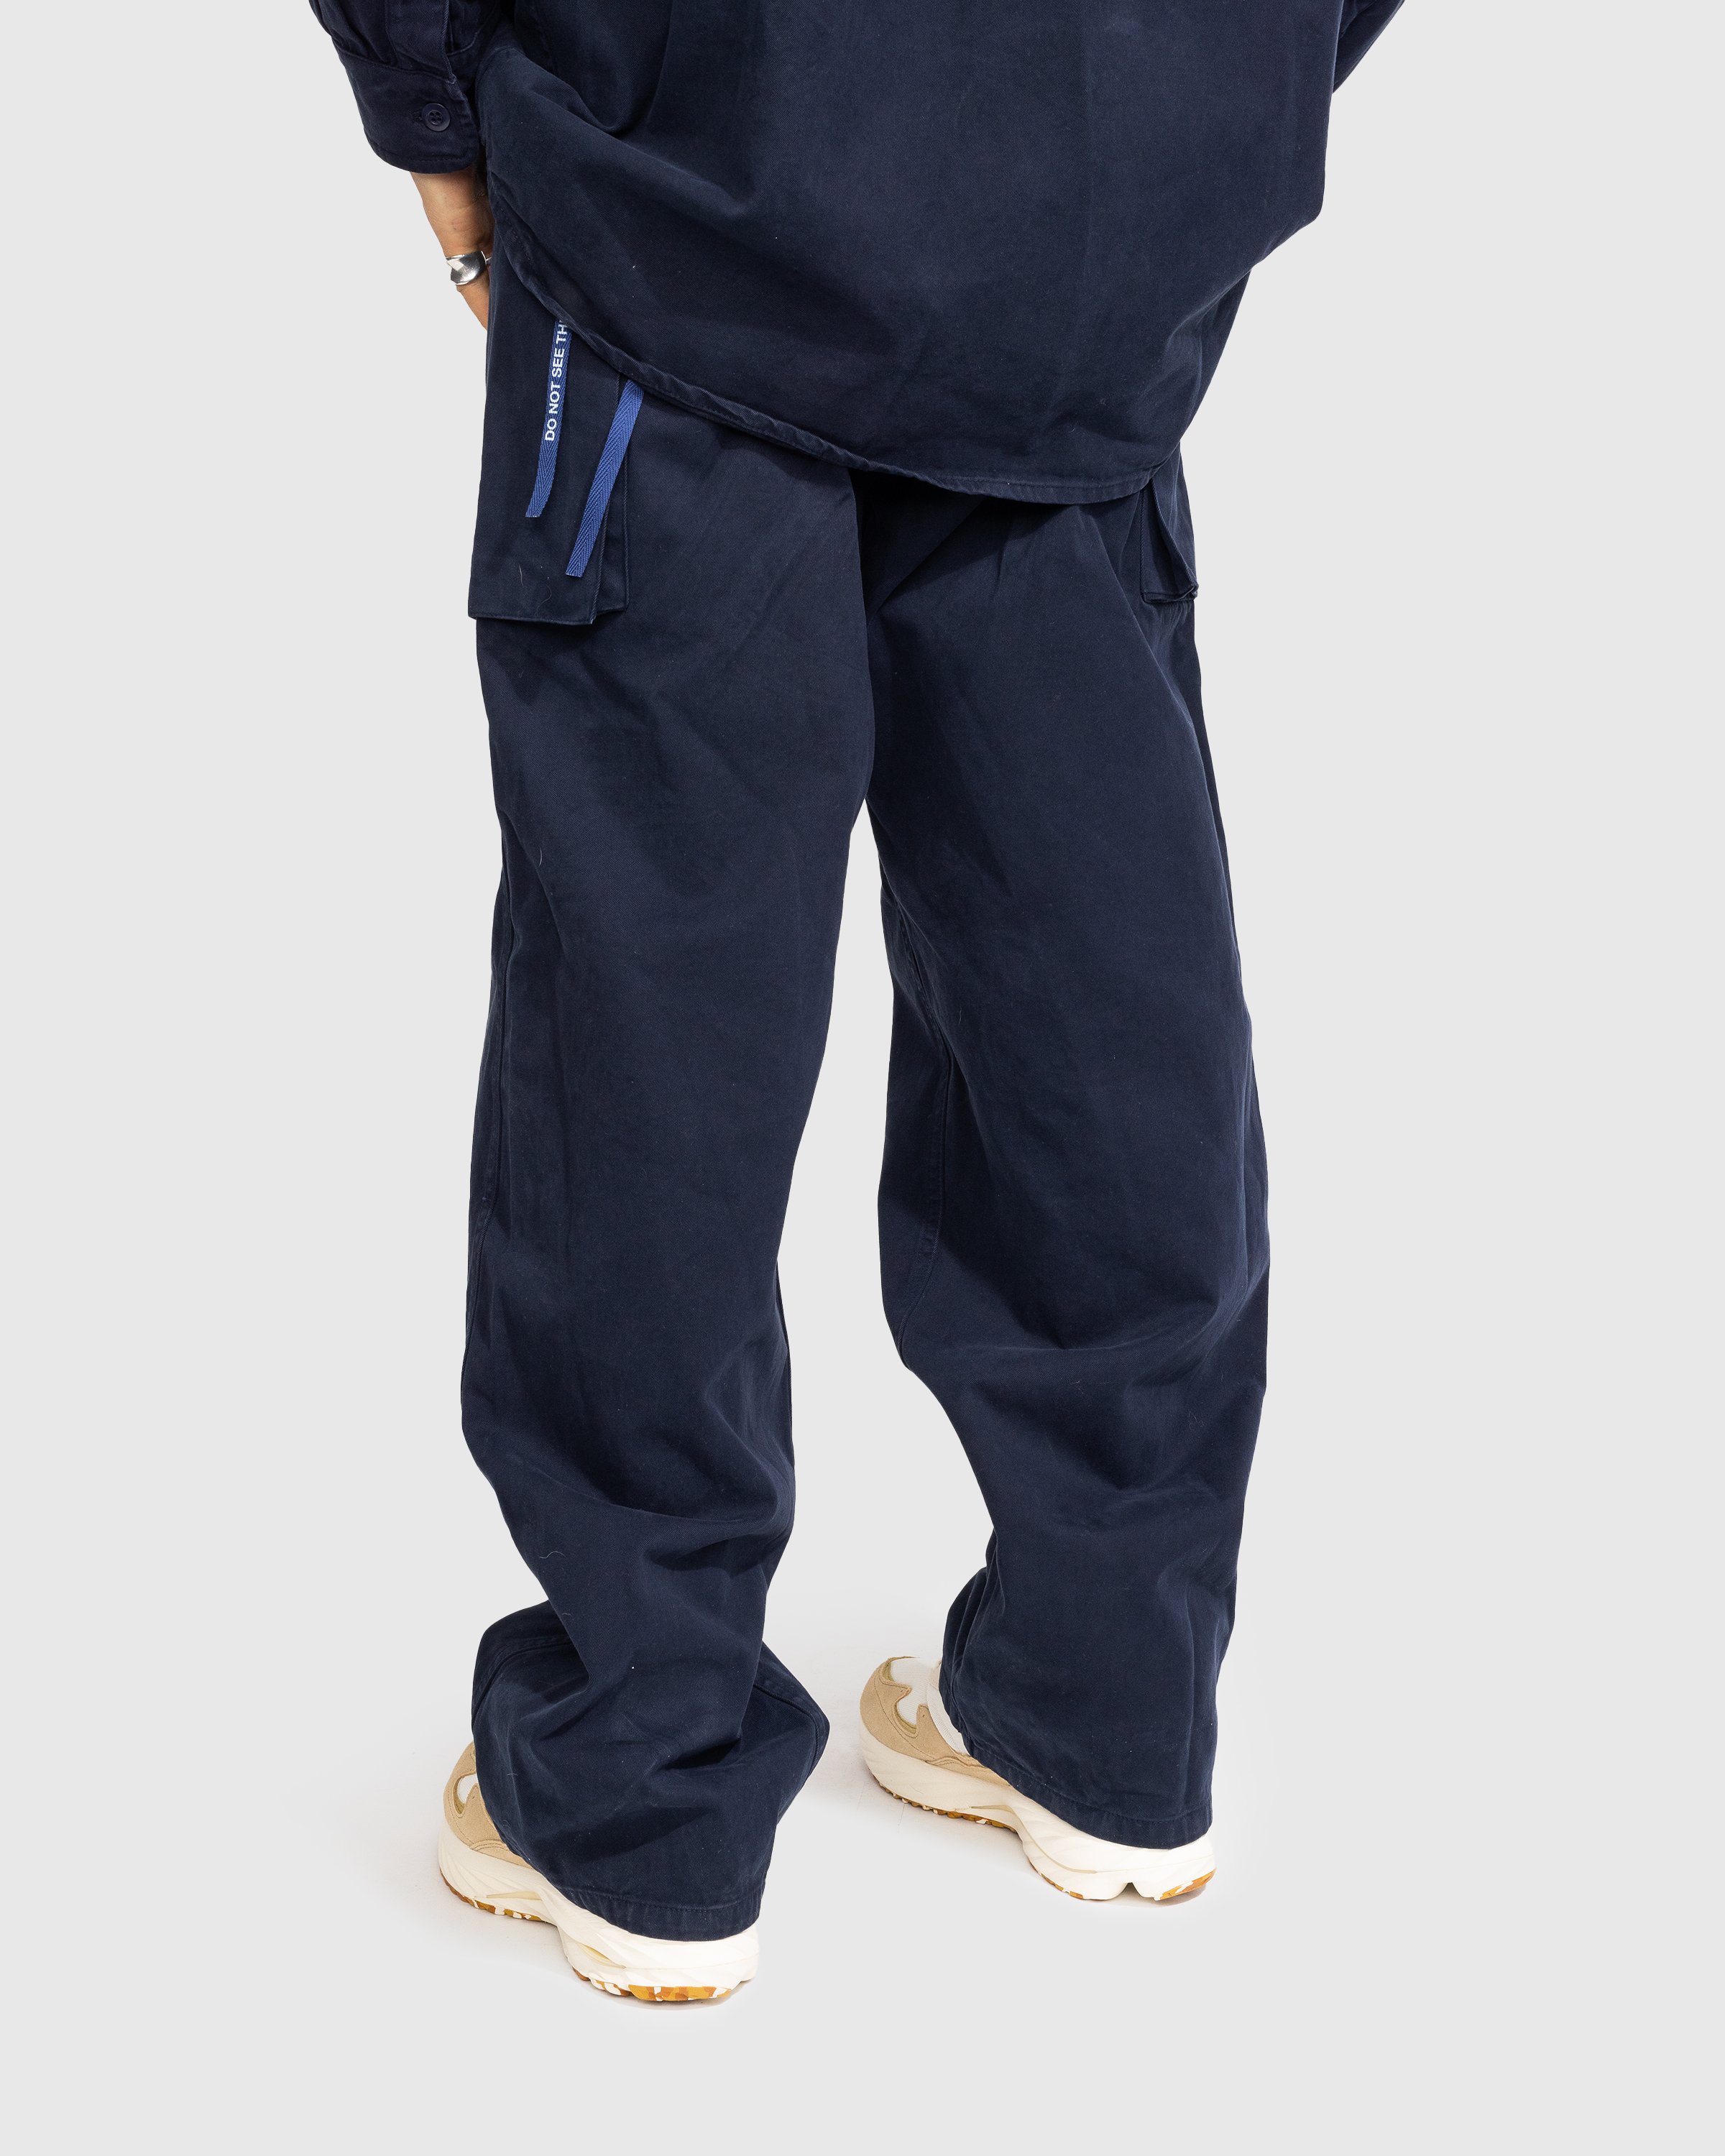 A.P.C. x Jean Touitou - Booster Fatigue Pants Navy - Clothing - Blue - Image 3